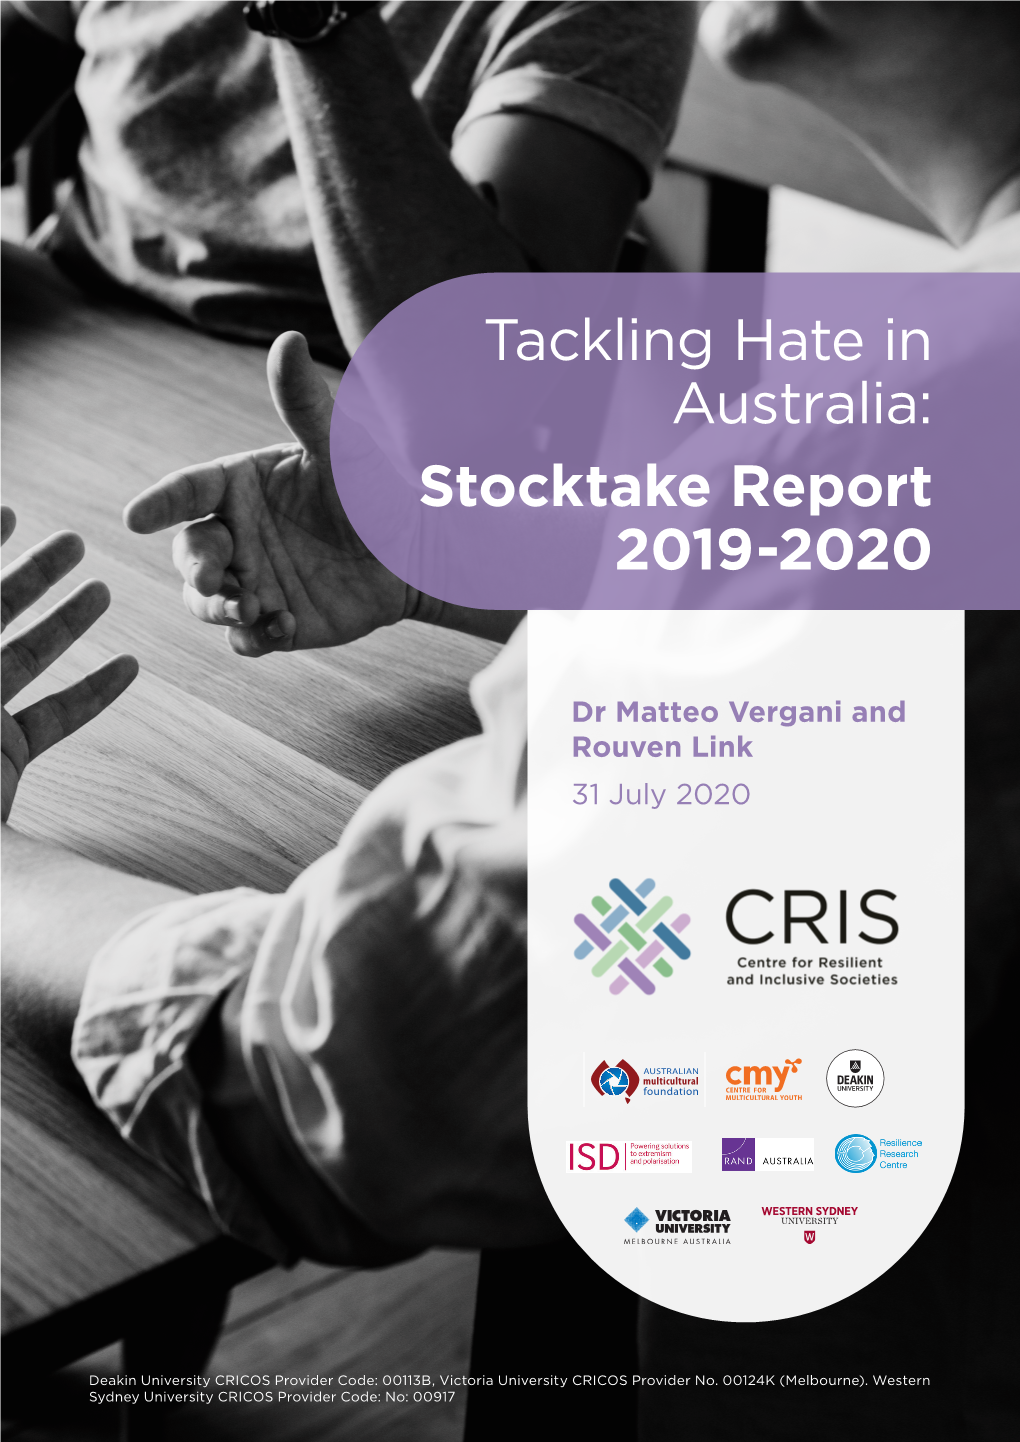 Tackling Hate in Australia: Stocktake Report 2019-2020